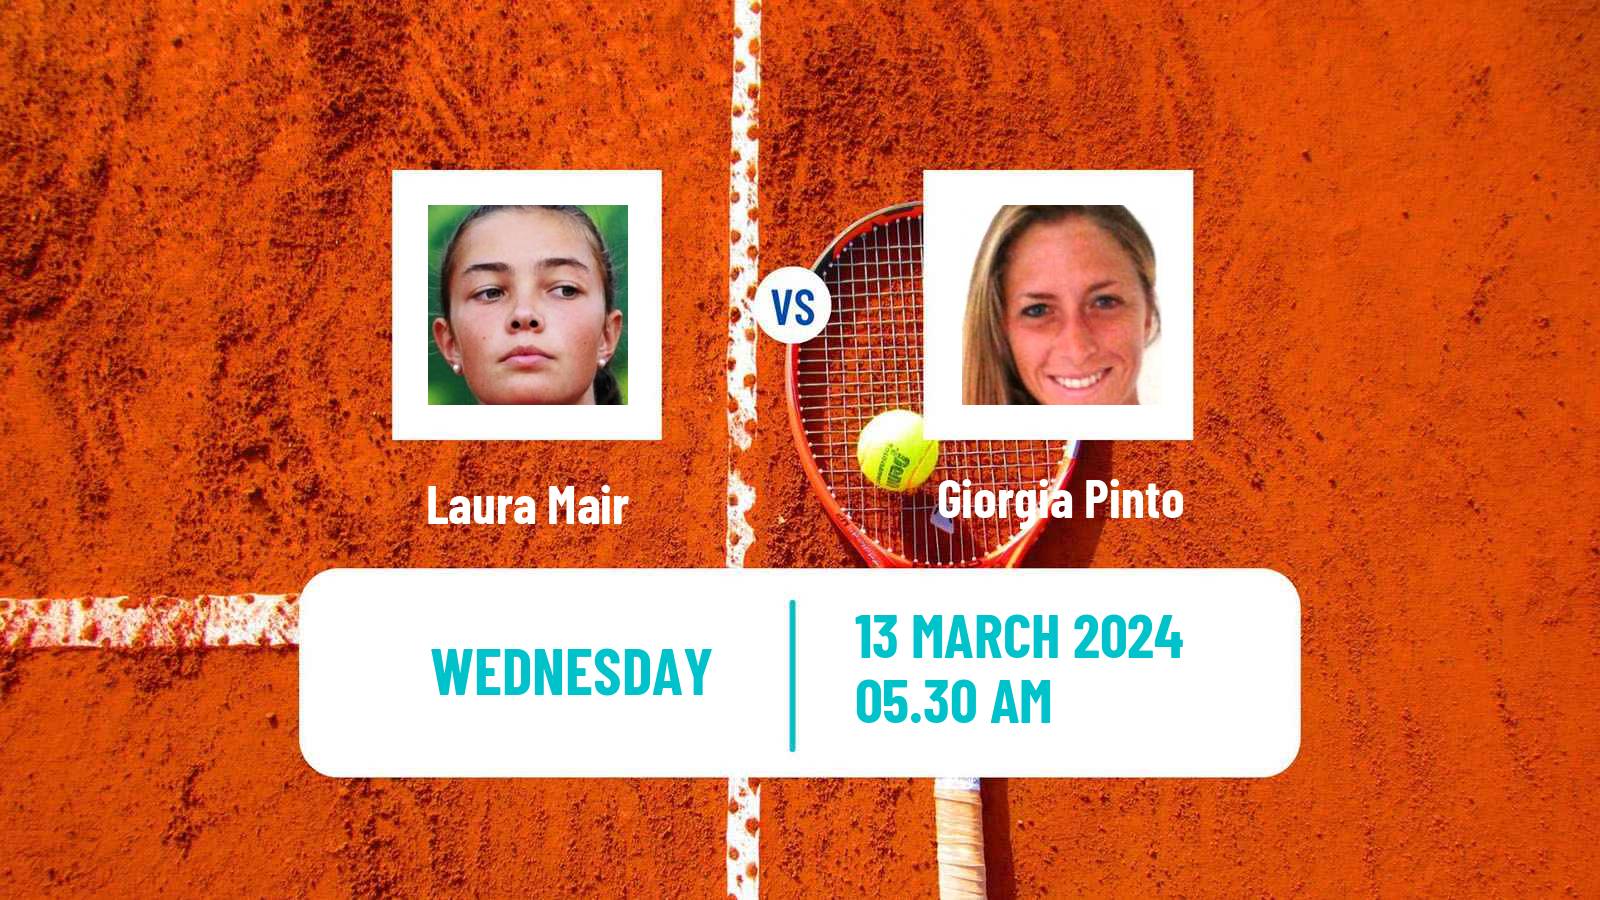 Tennis ITF W15 Heraklion 2 Women Laura Mair - Giorgia Pinto